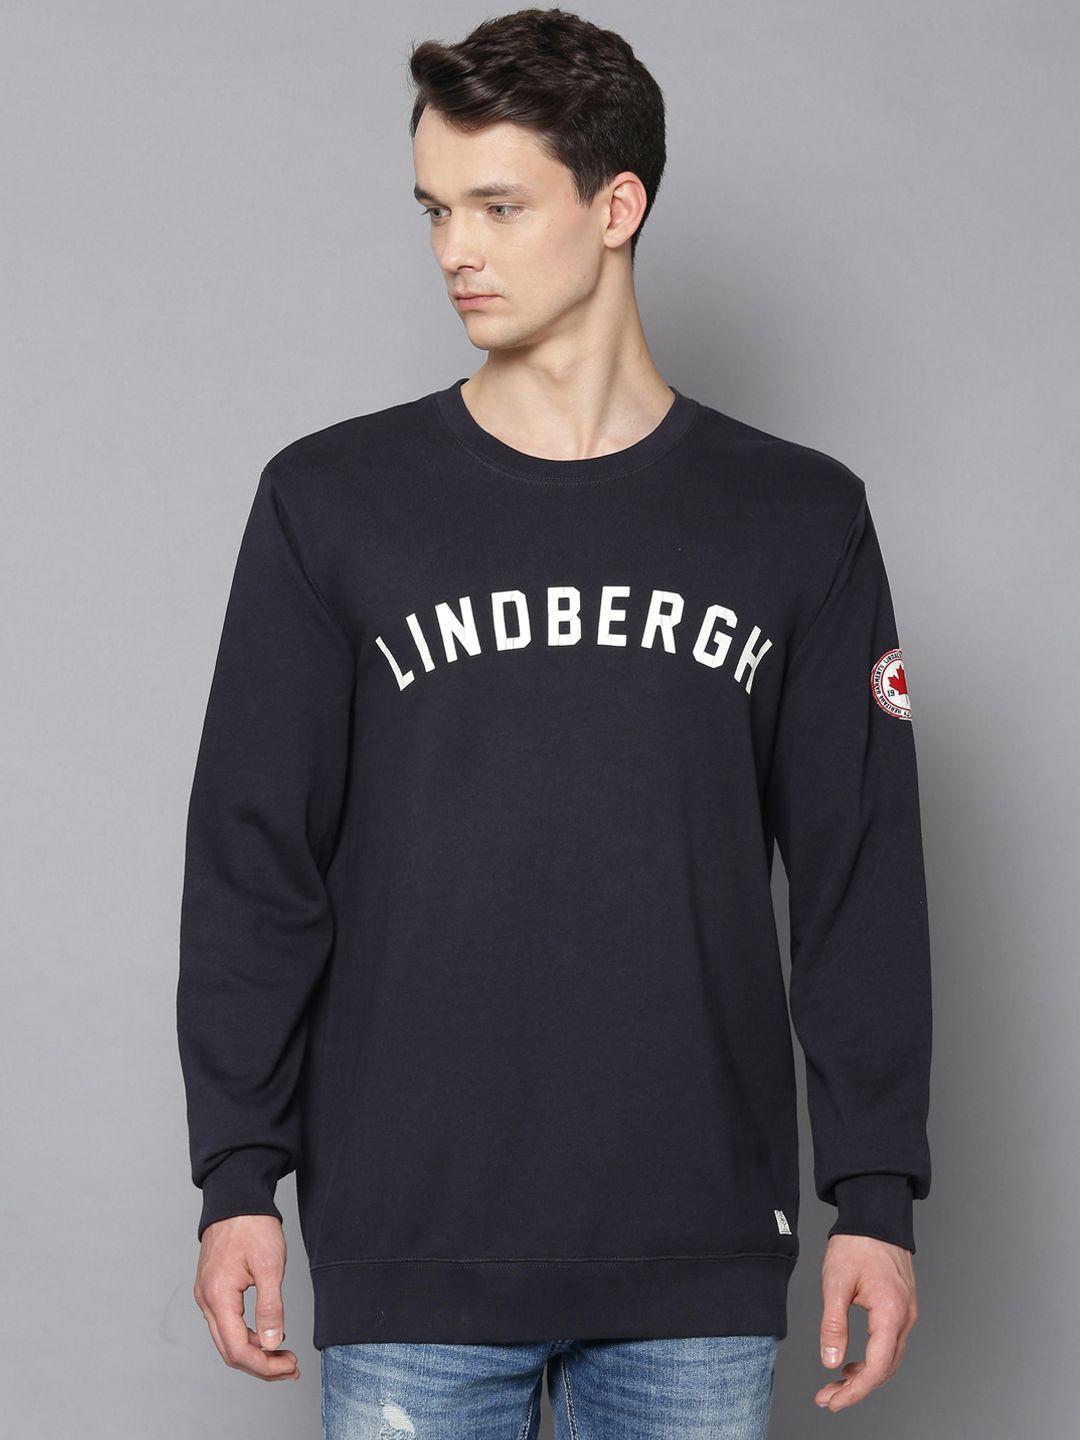 lindbergh-men-navy-blue-sweatshirt